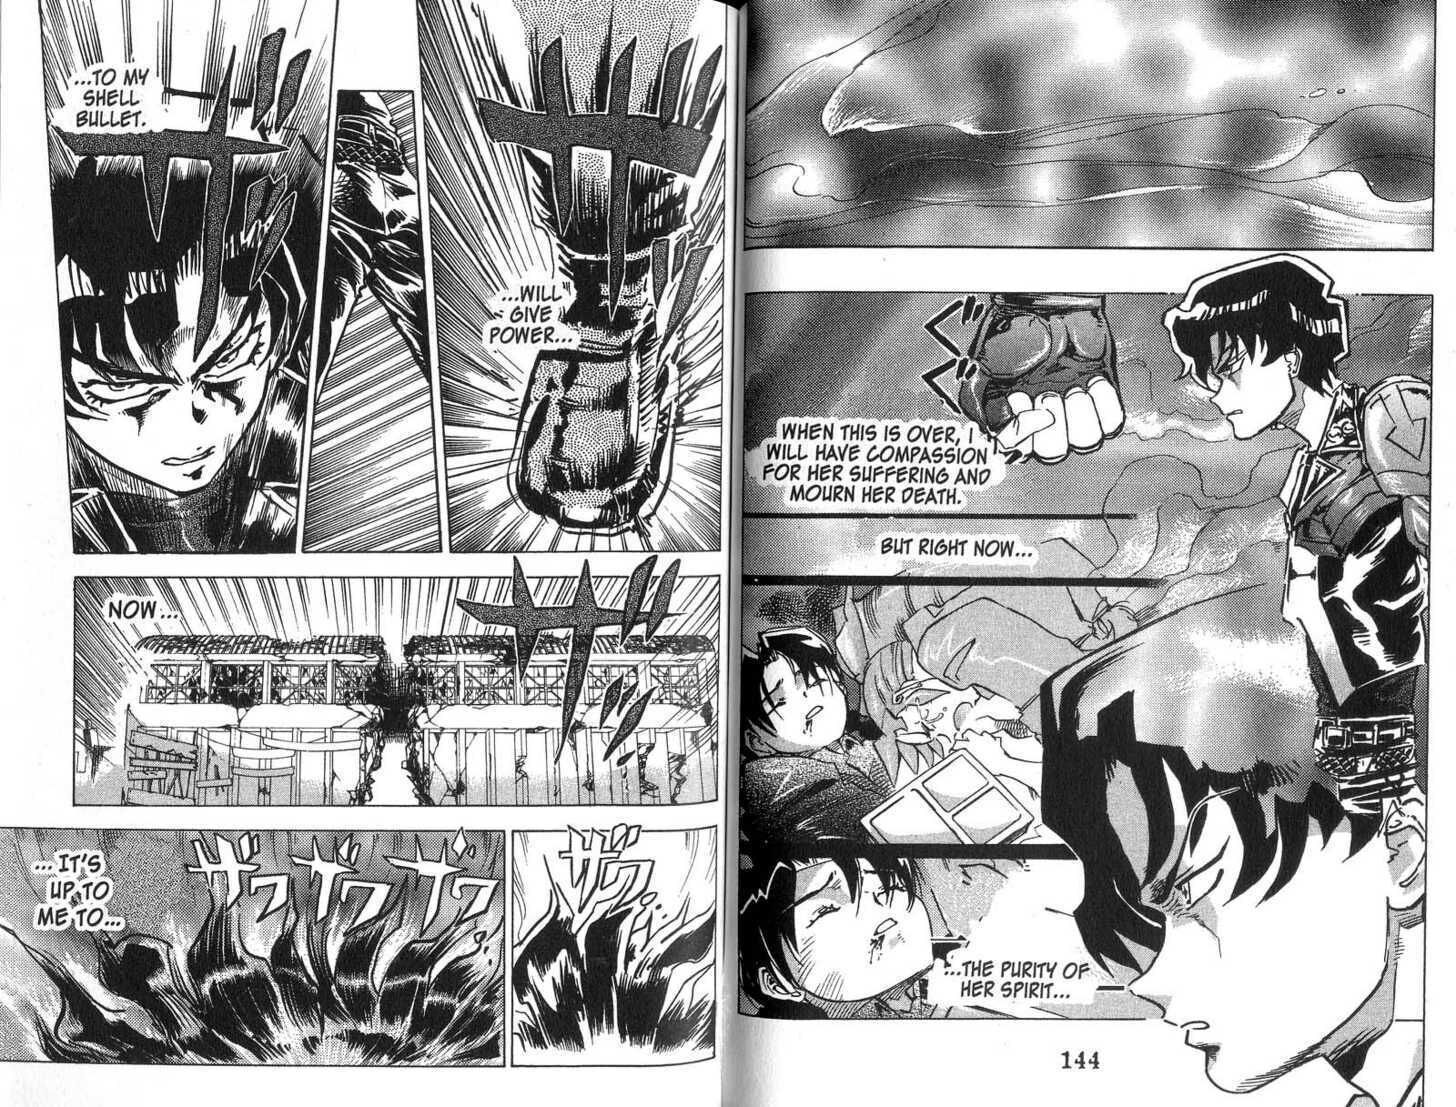 kazuma torisuna from s - cry - ed anime, Stable Diffusion